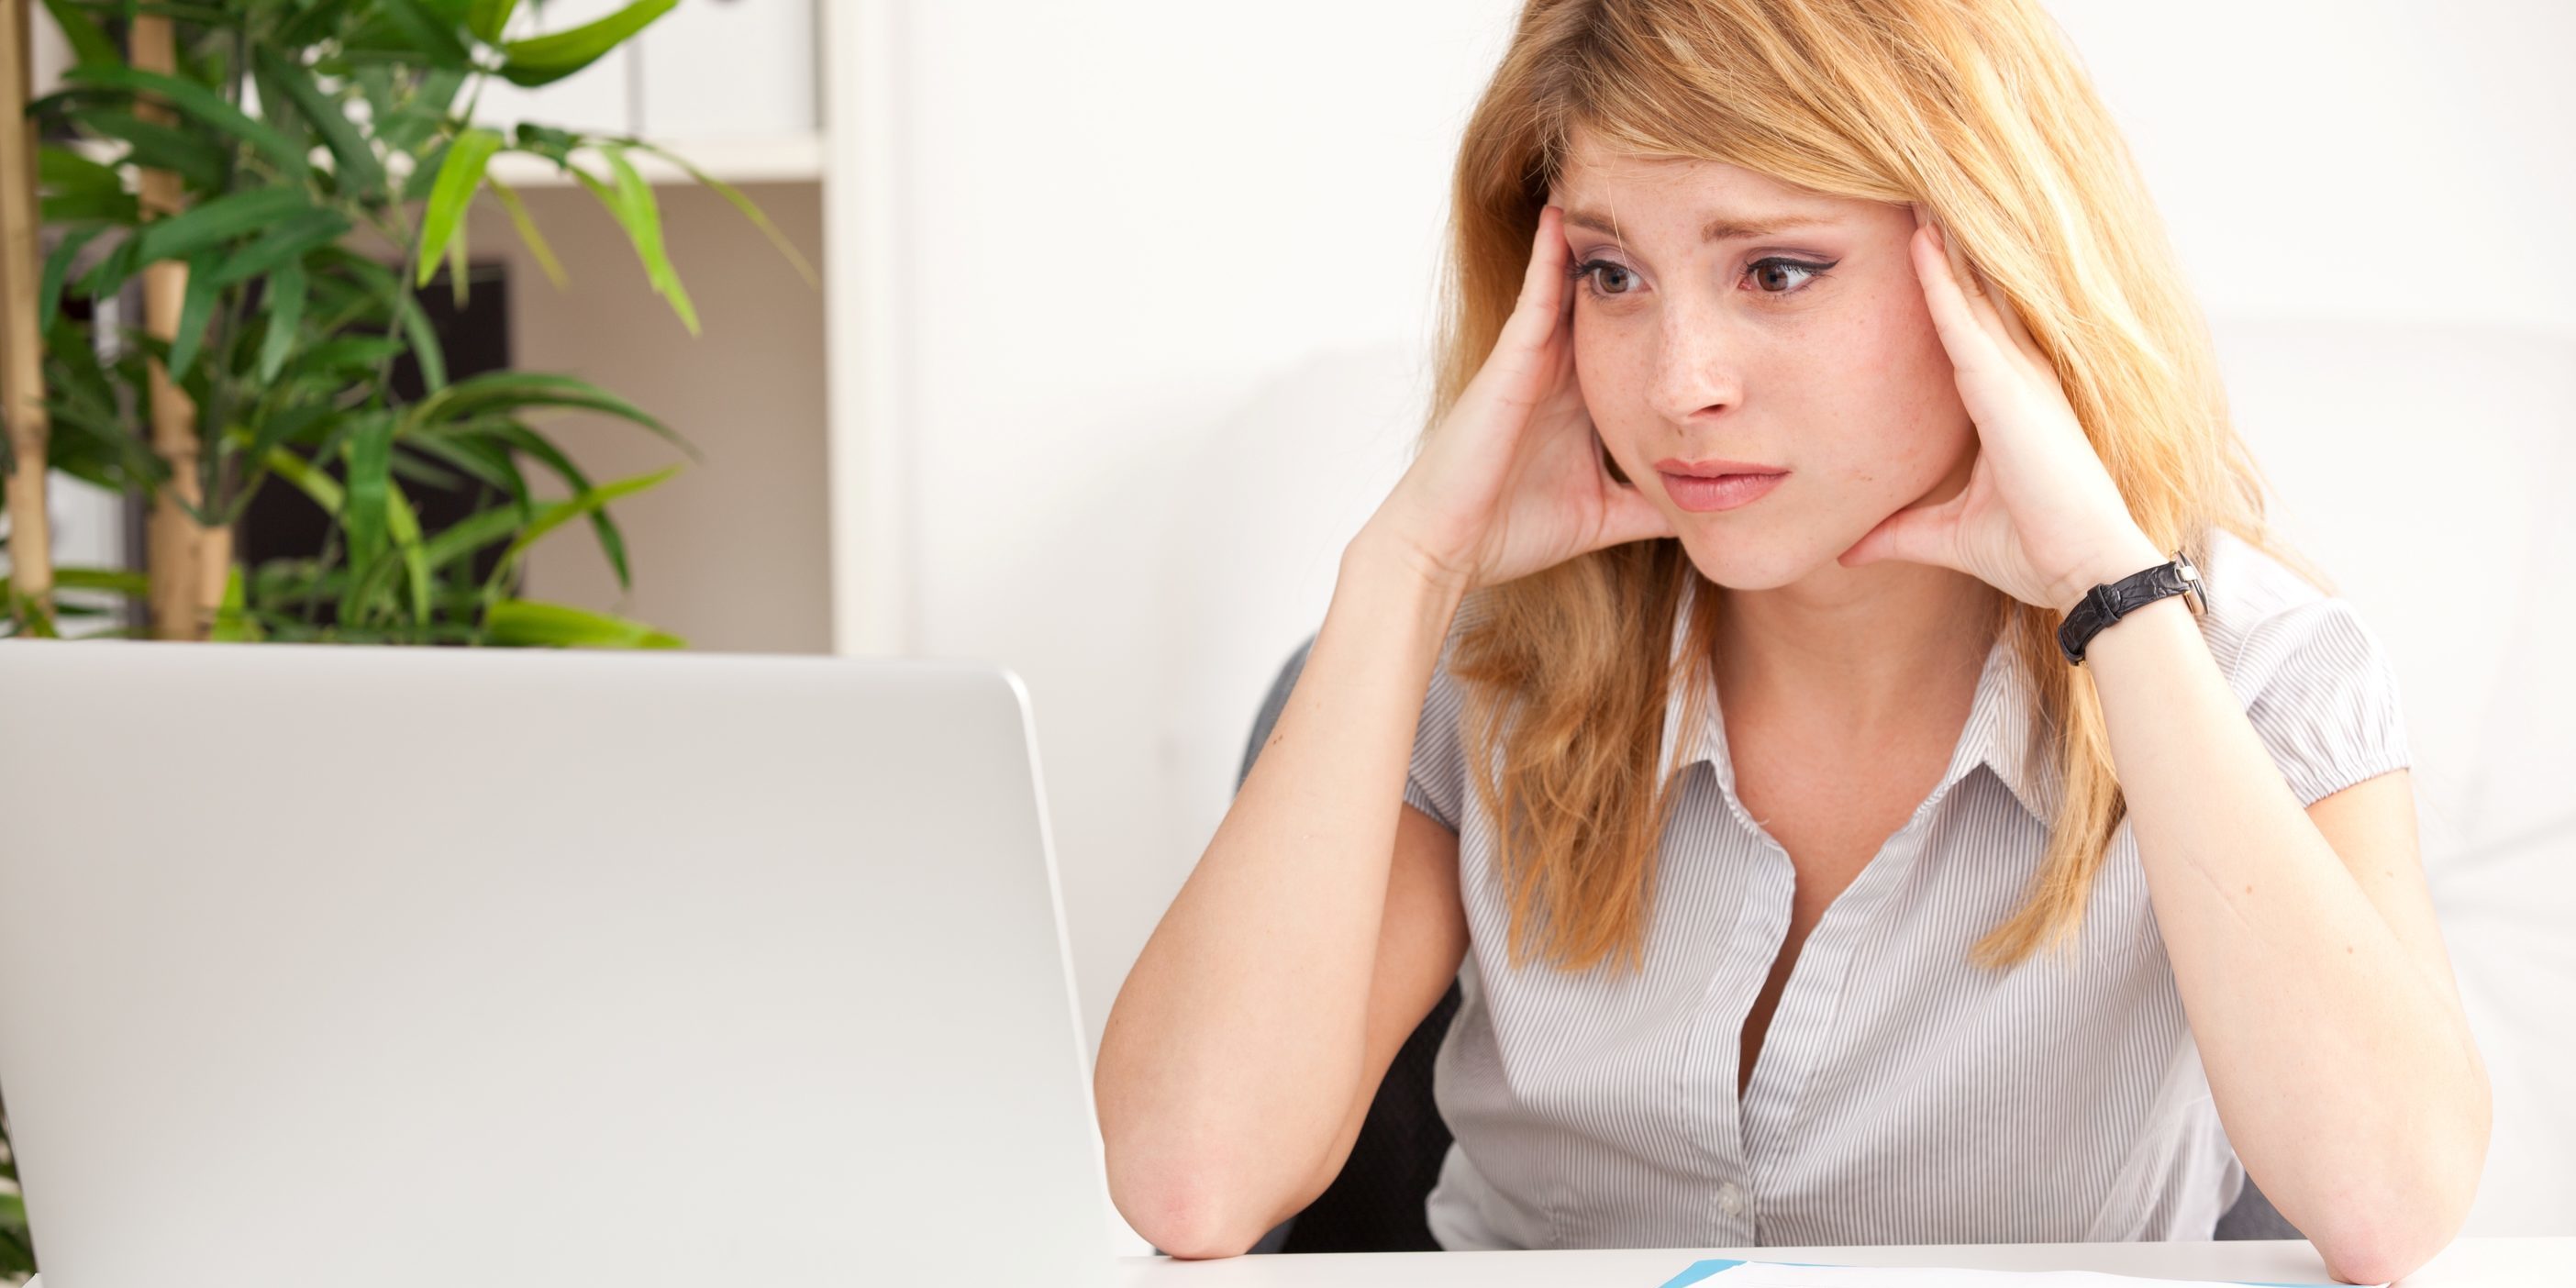 Managing online patient reviews | Vanguard Communications | Business woman concerned about reviews